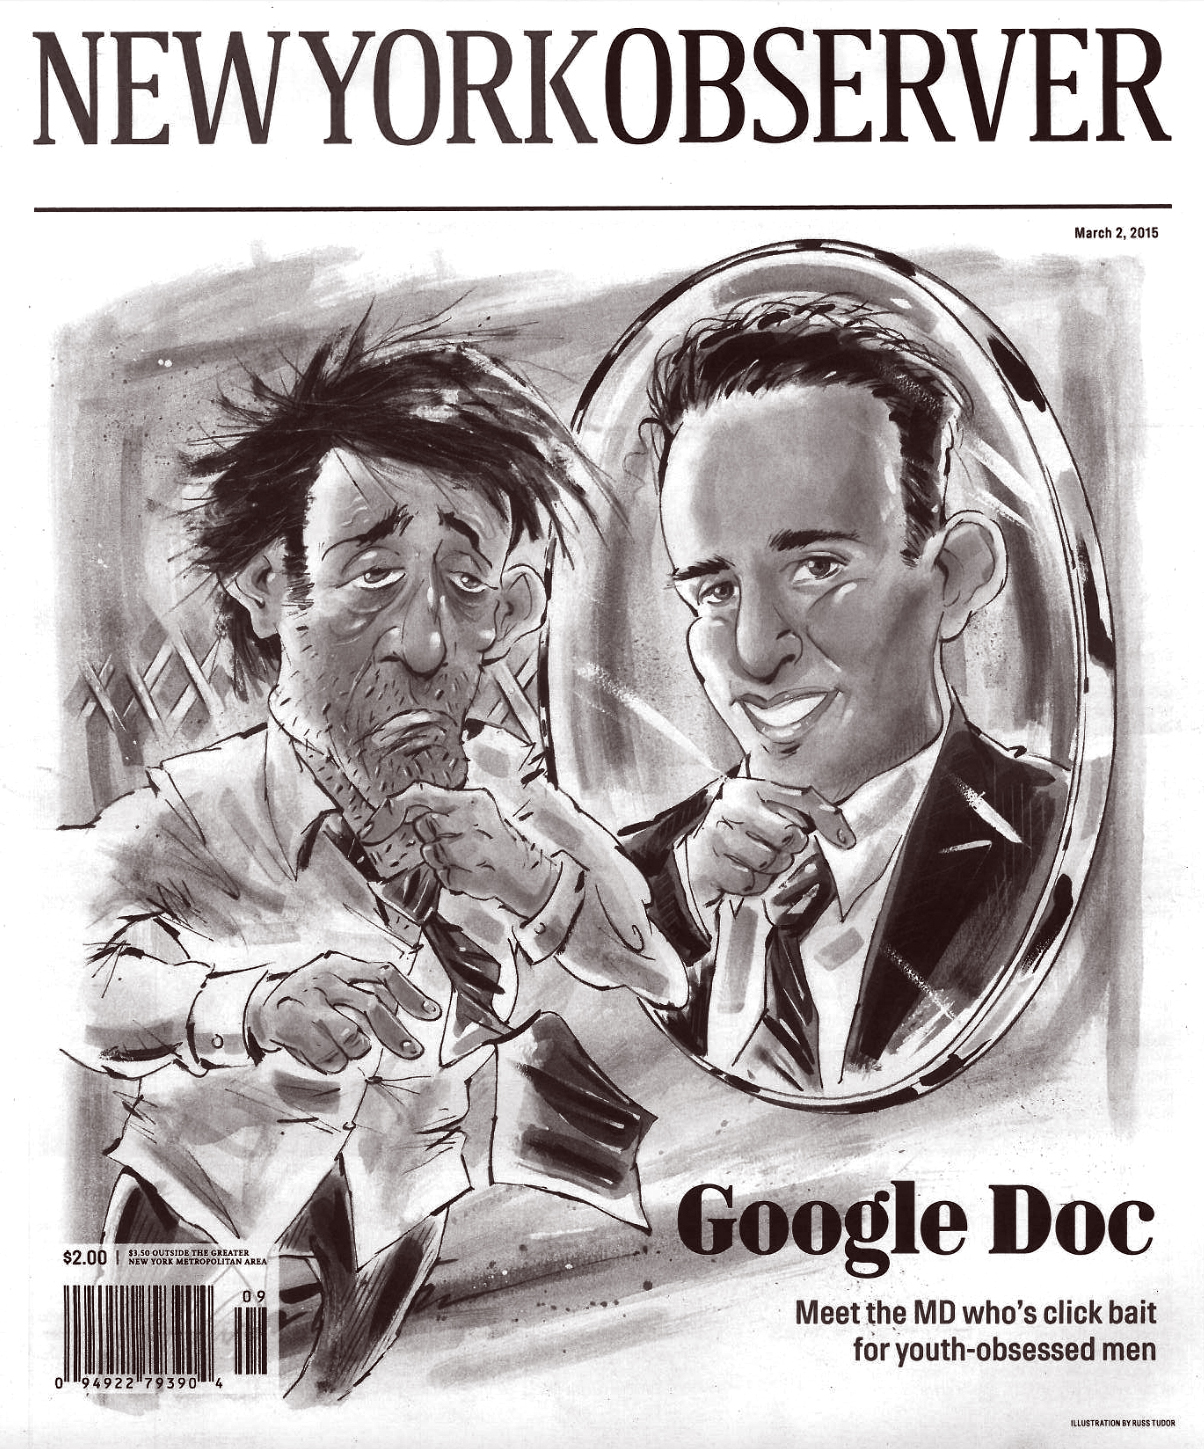 New York Observer Cover story on Dr. Frank